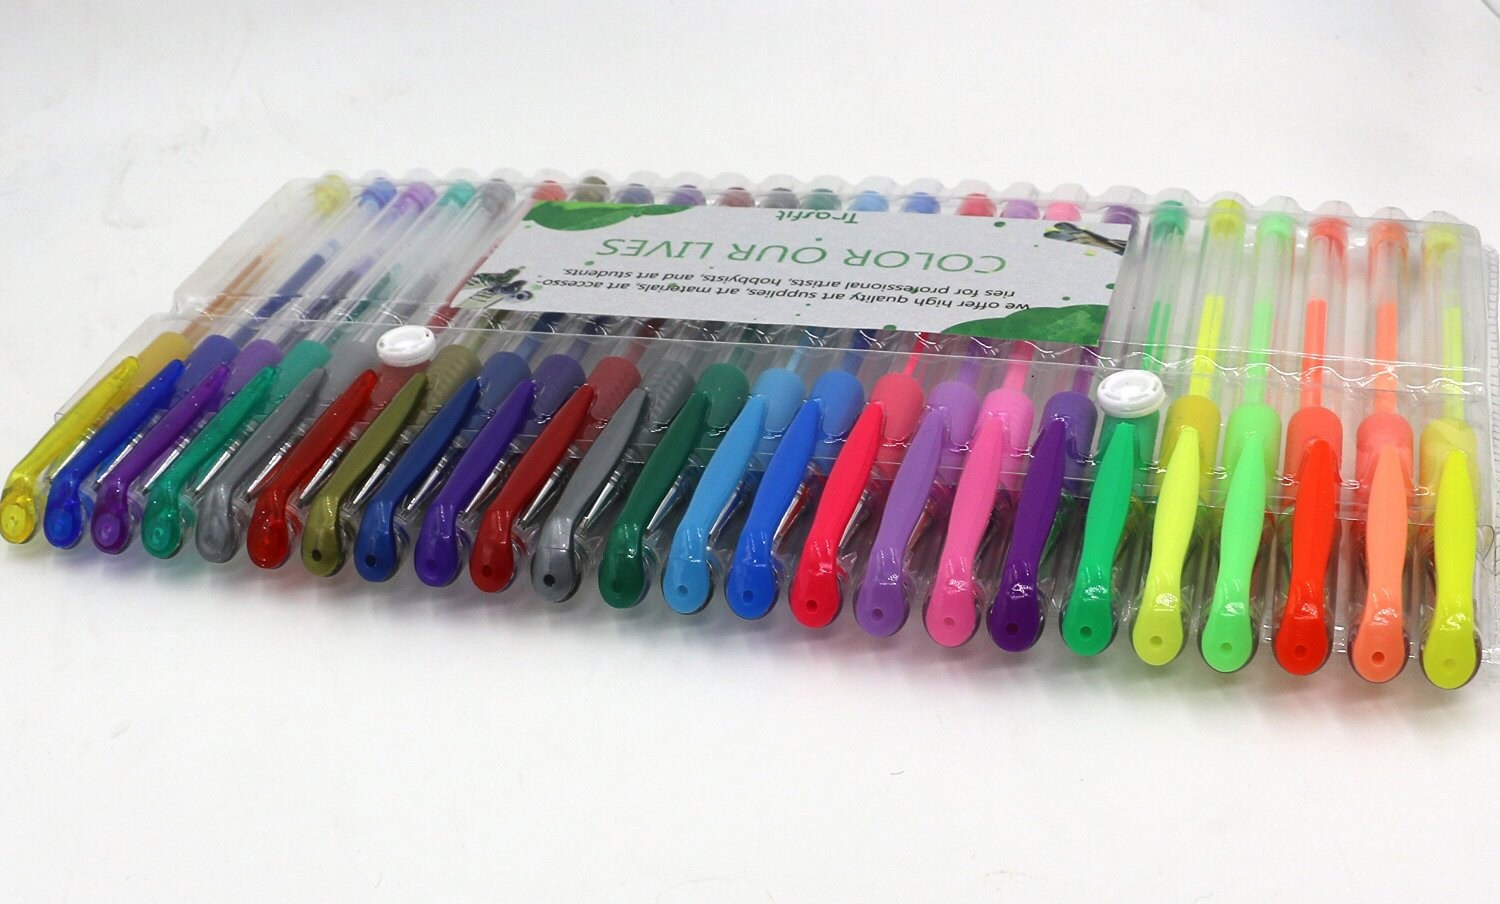 24 Coloring Gel Pens Adult Coloring Books, Drawing, Bible Study, Planner,  Scrapbooking Kawaii Cute Gel Pens 12 Neon and 12 Glitter 